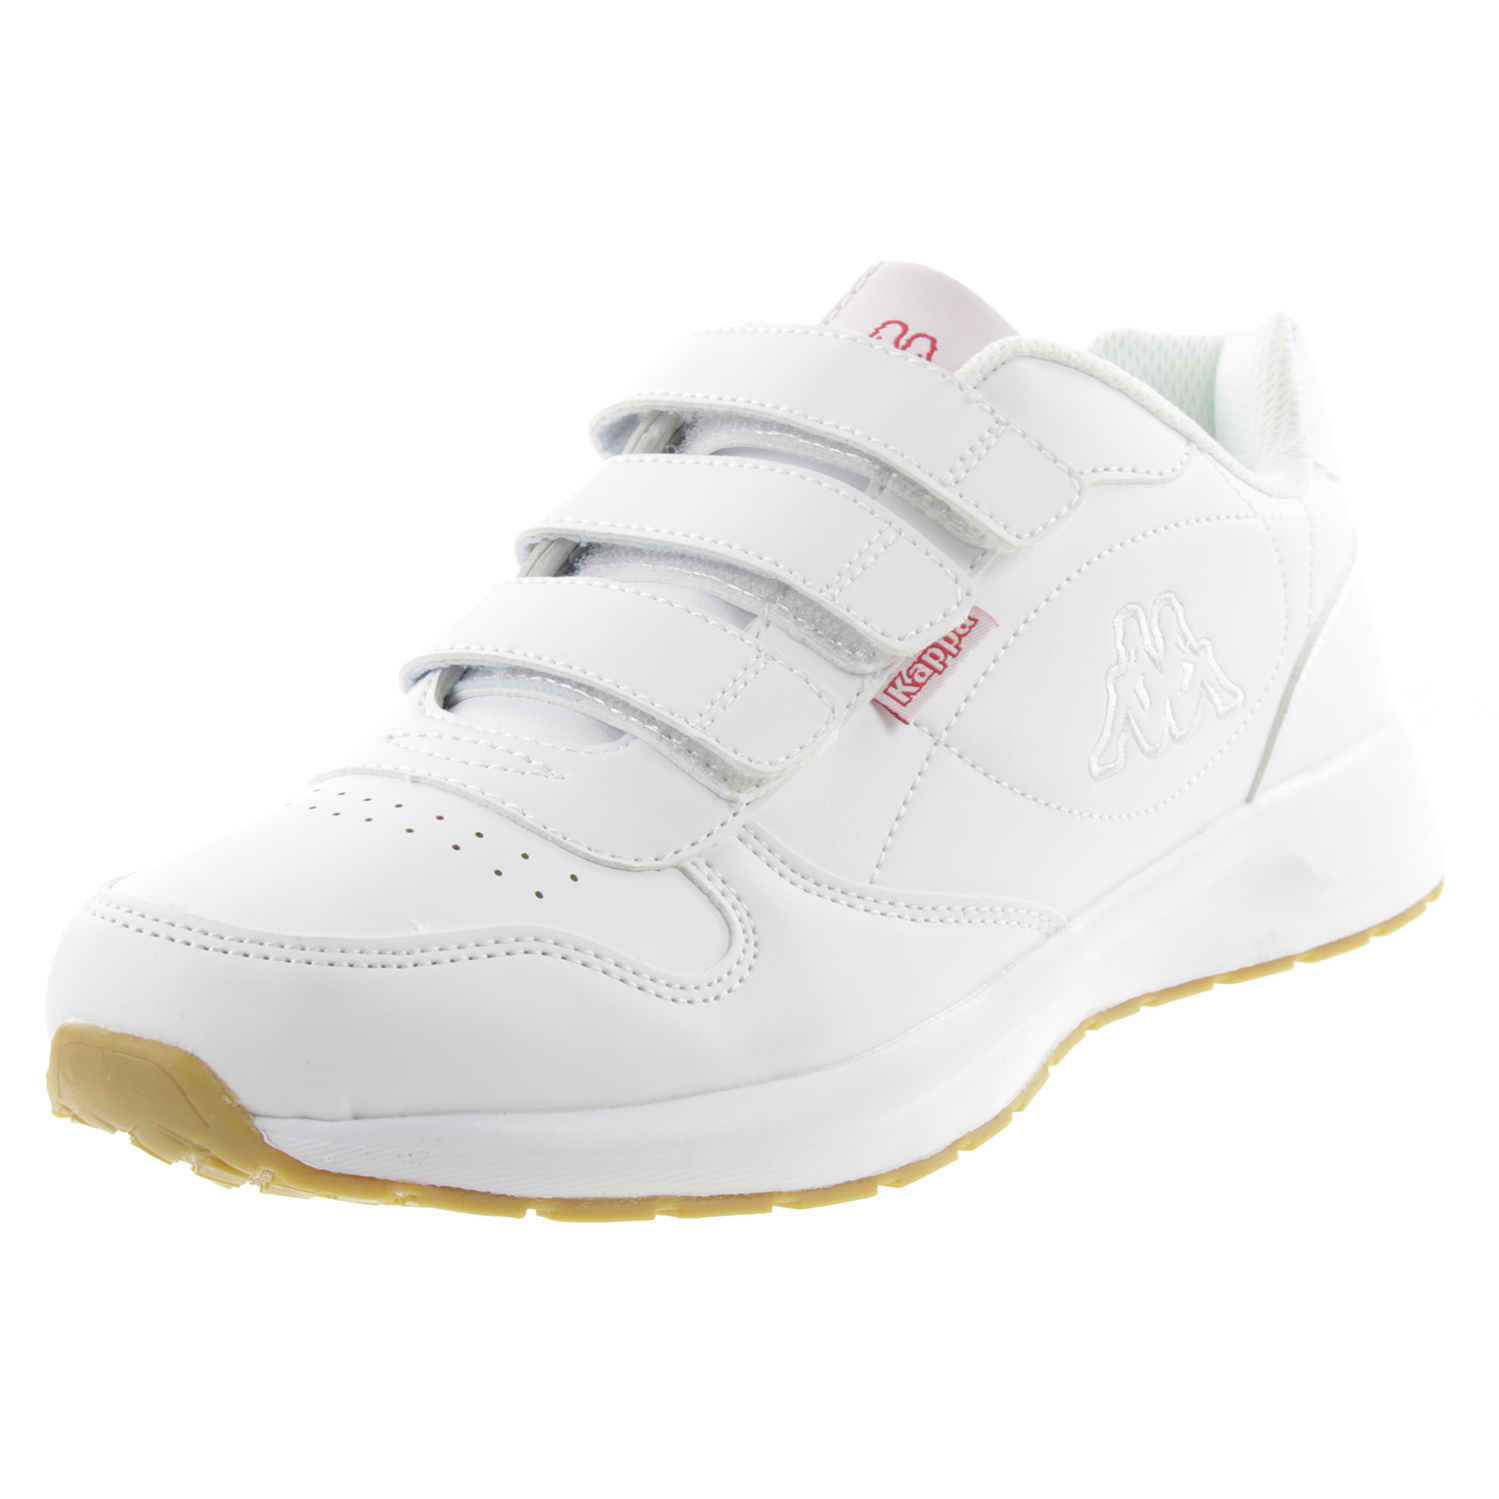 Kappa Unisex-Erwachsene Base VL Sneaker, 1010 White, 46 EU